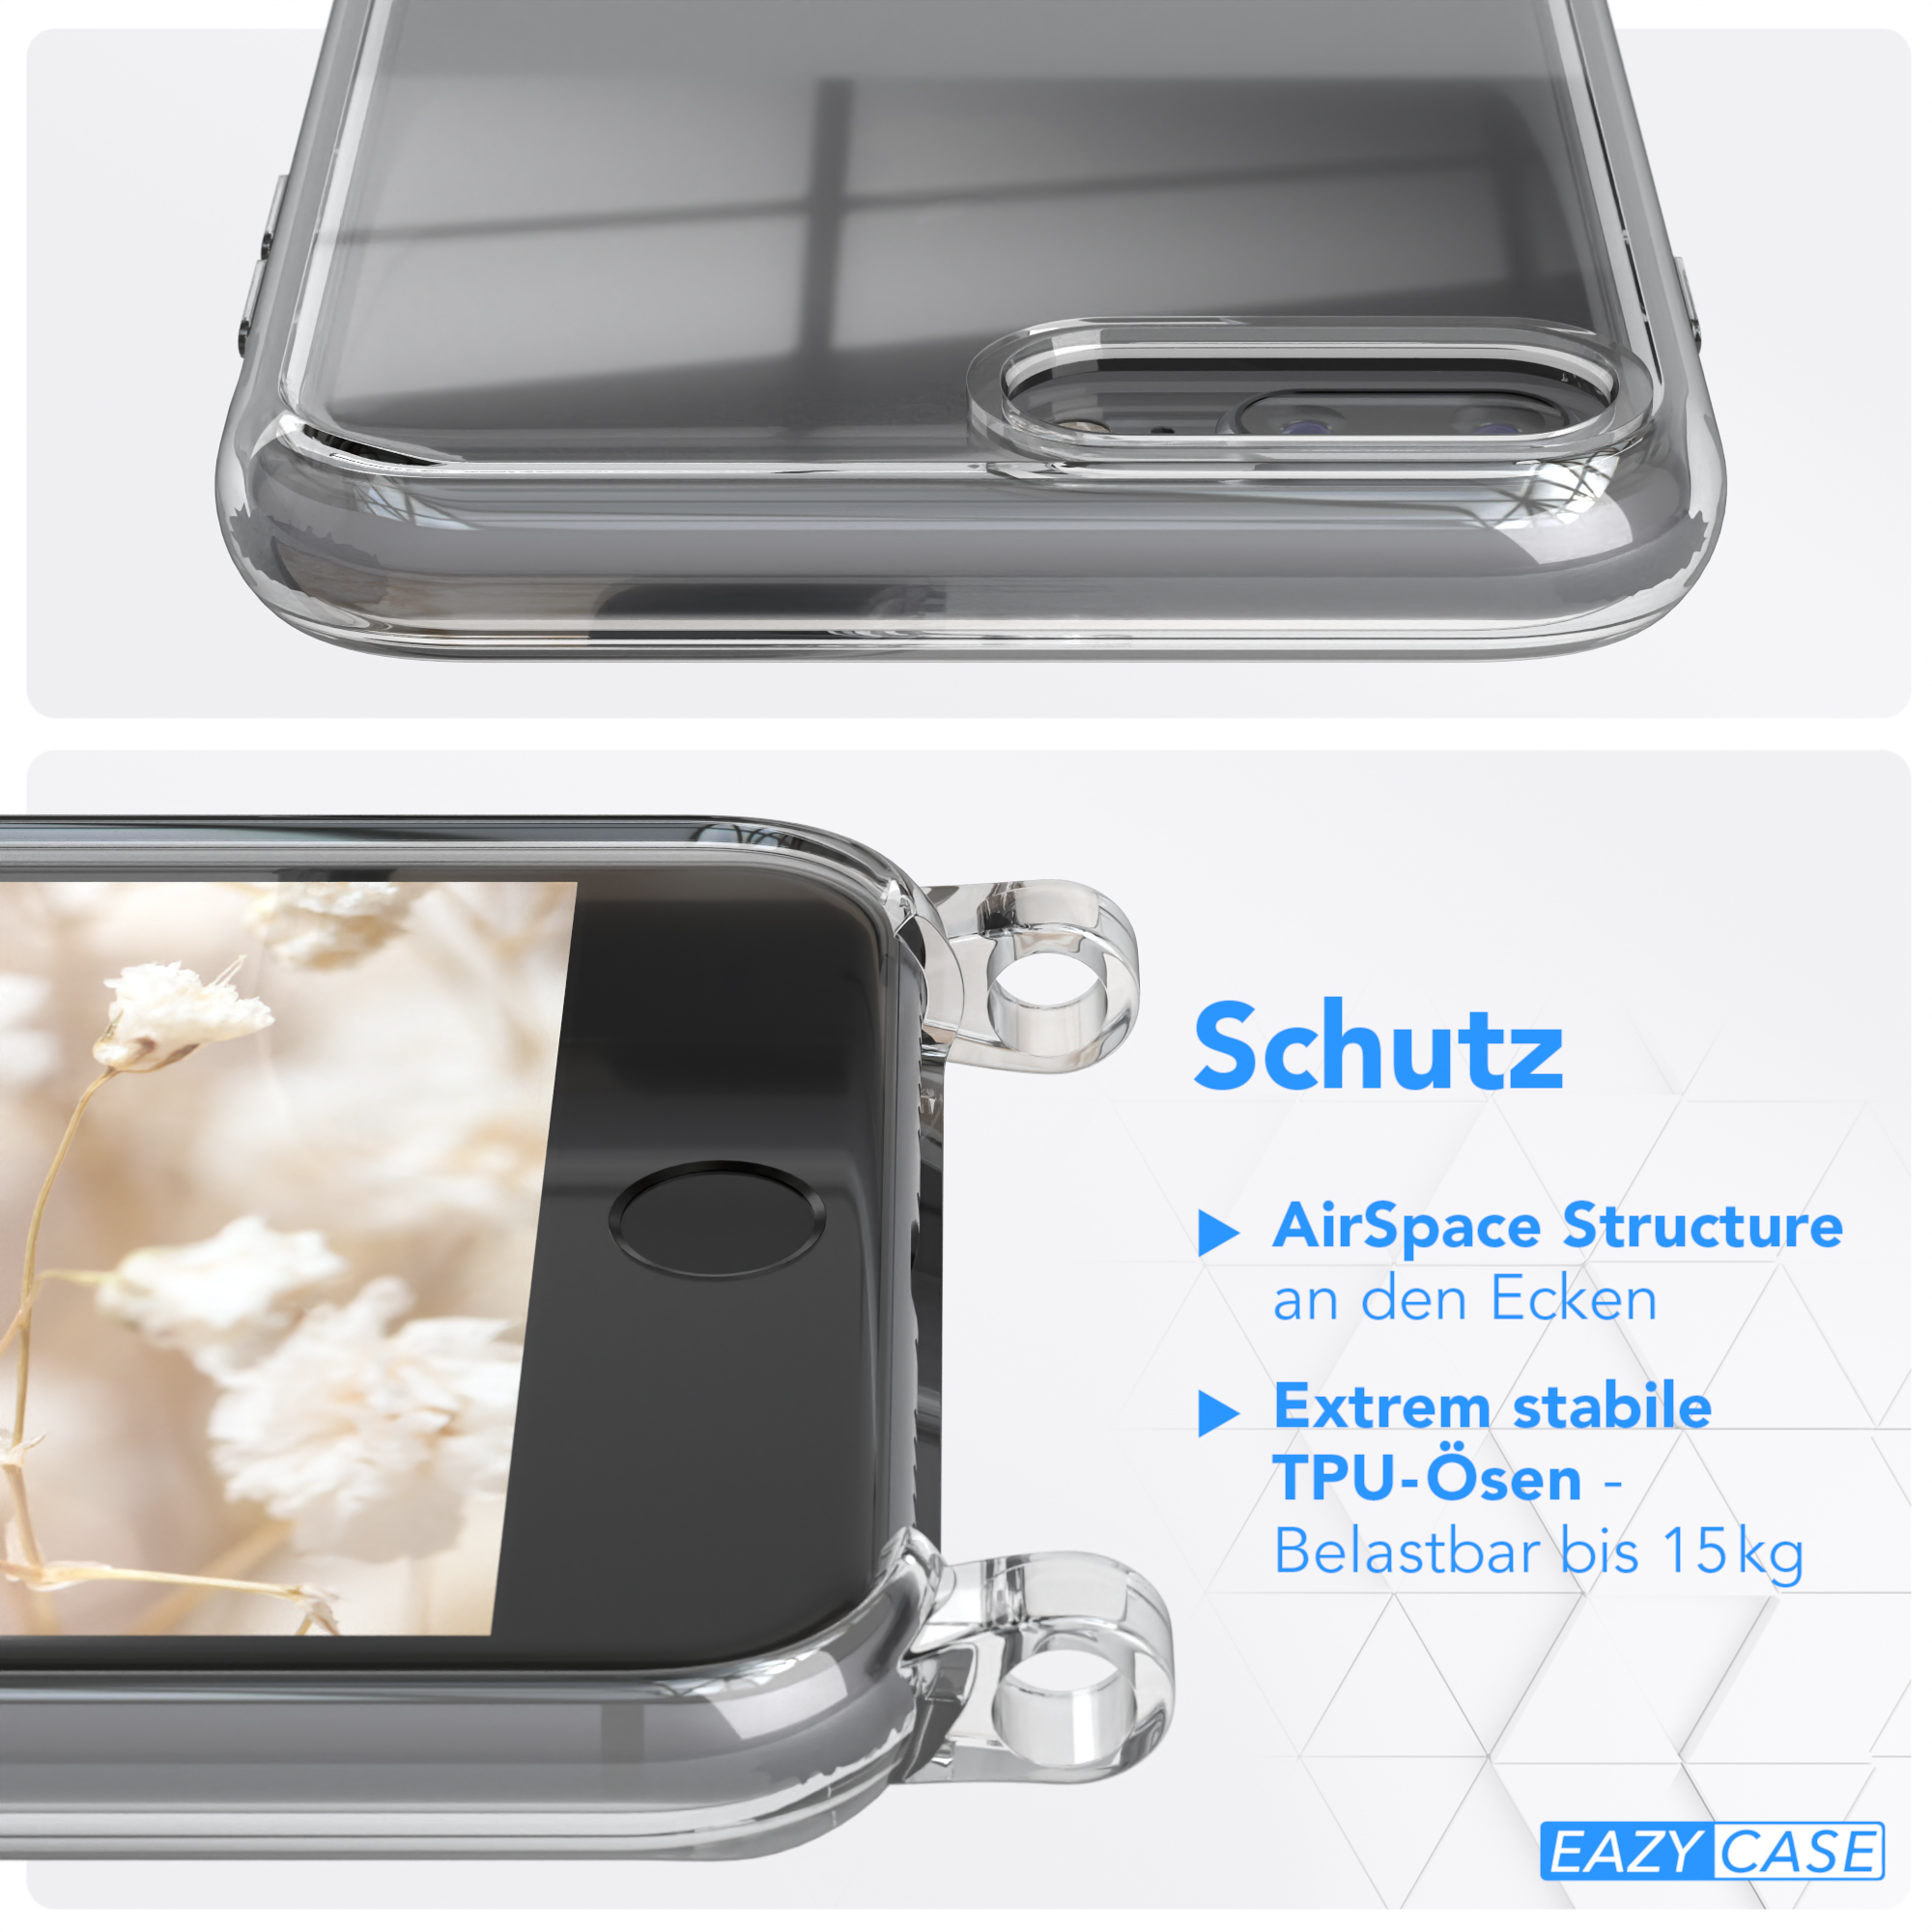 Plus, Transparente Umhängetasche, / Plus CASE Rot mit Apple, Boho 7 8 Braun EAZY iPhone Style, Handyhülle Kordel /